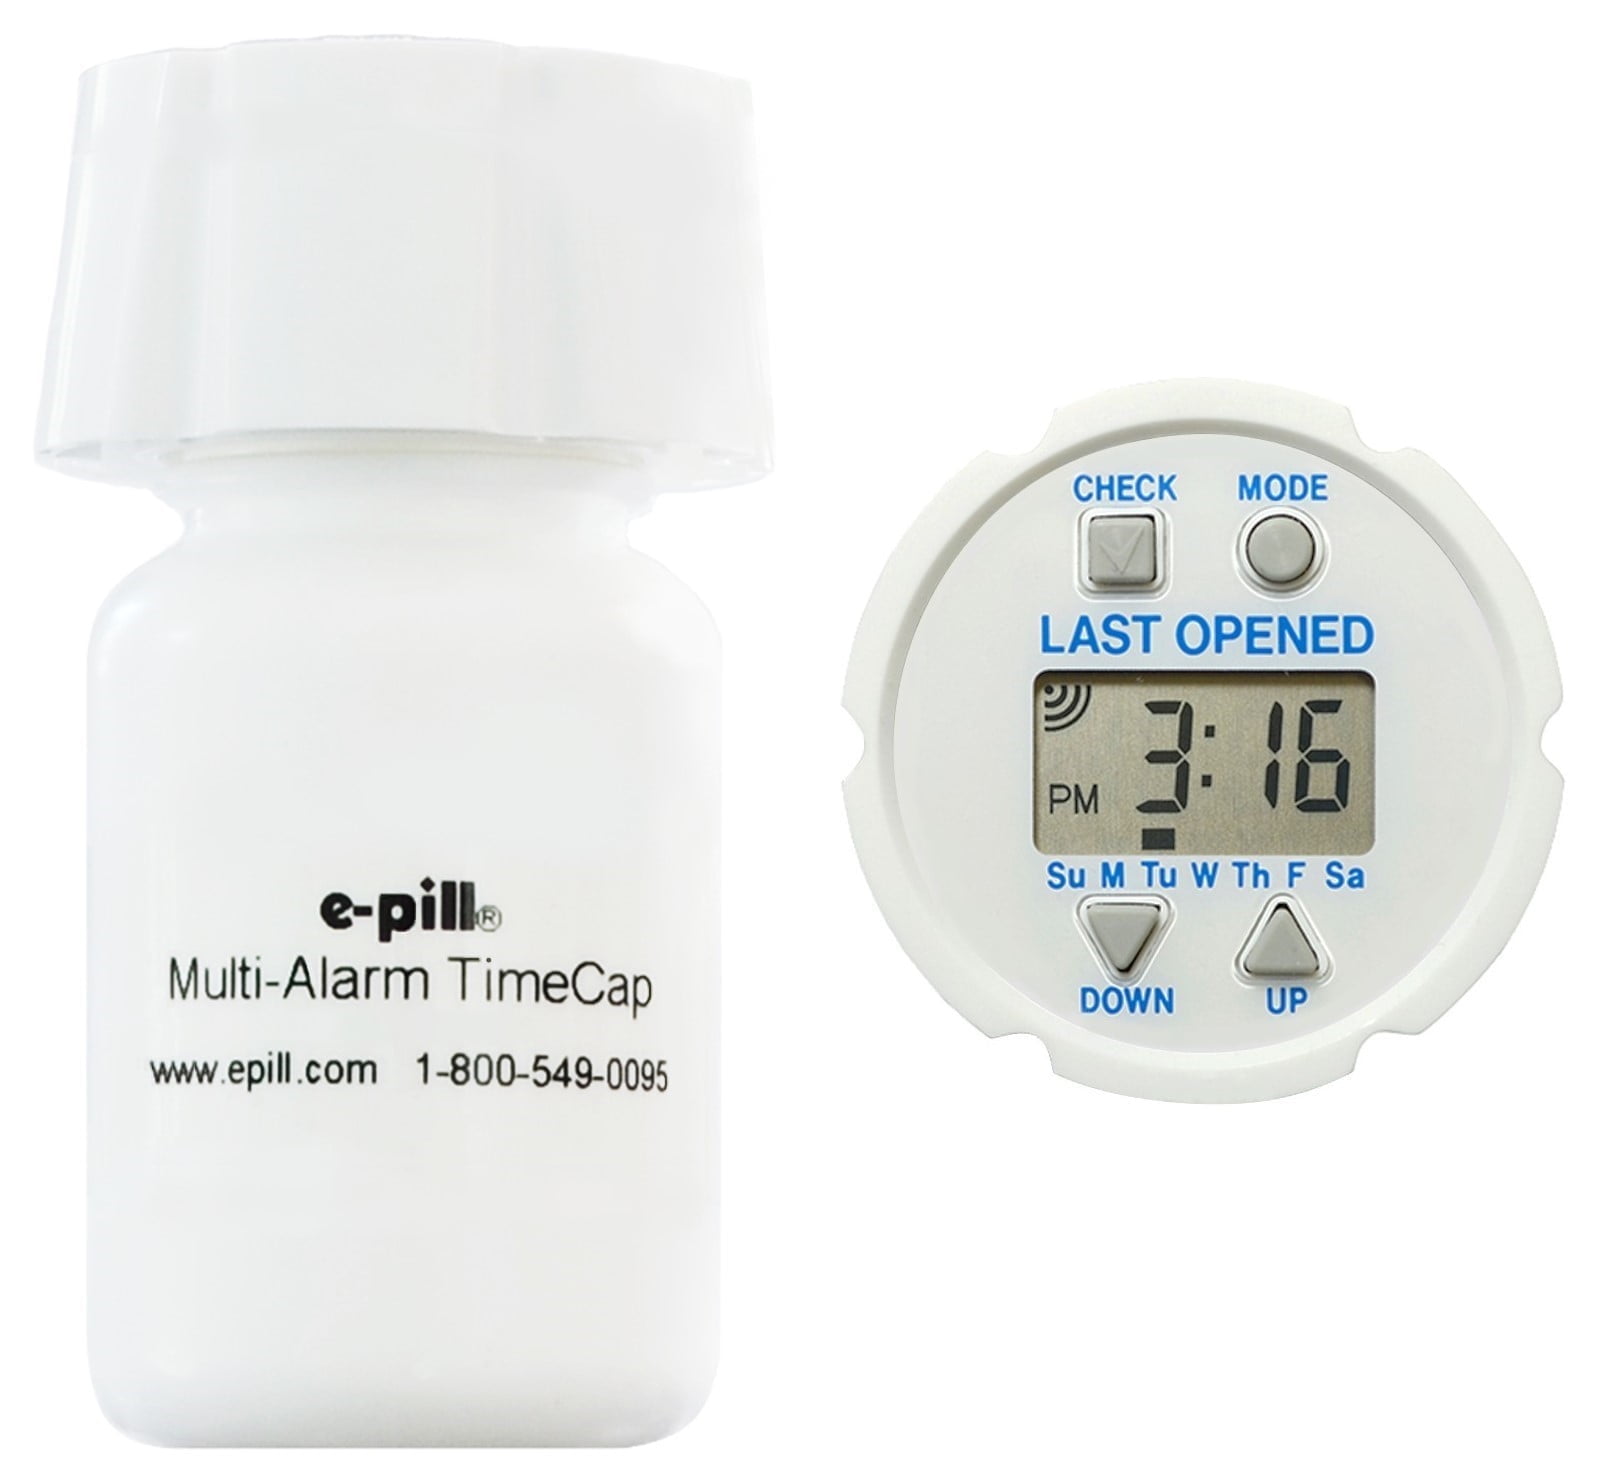 Ludlz Portable Mini Outdoor Travel Pill Case - Portable Small Supplements Tablet Container Box - Medicine Capsule Vitamin Fold Flip Organizer